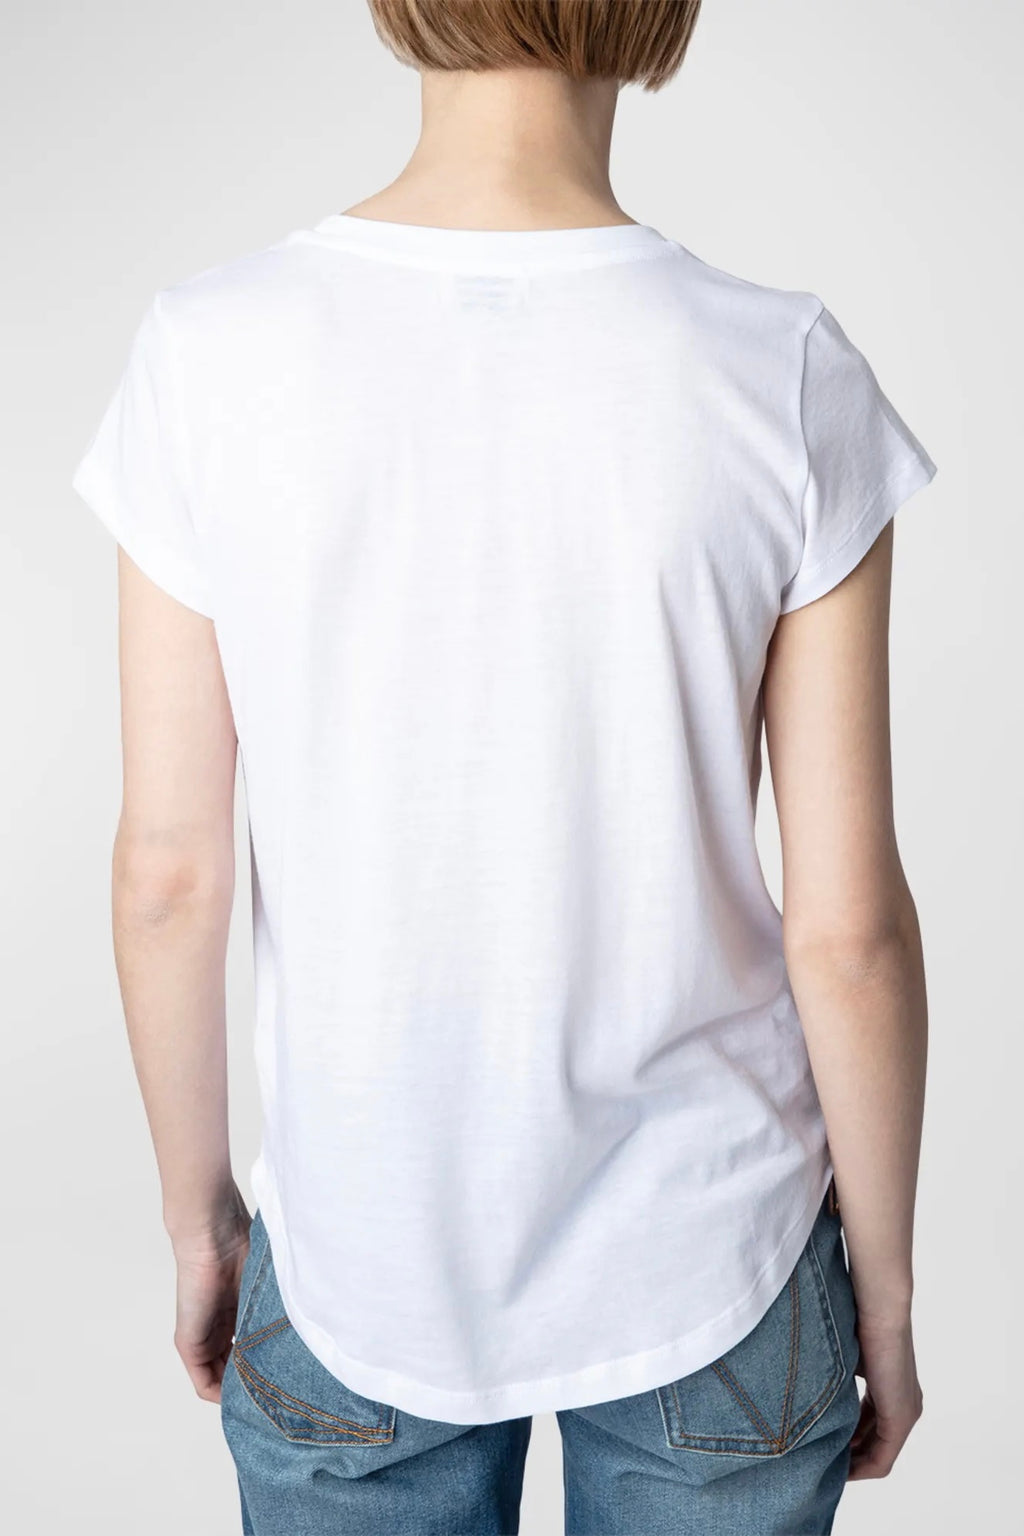 Zadig & Voltaire Woop Skull Stars Strass T-Shirt - Blanc